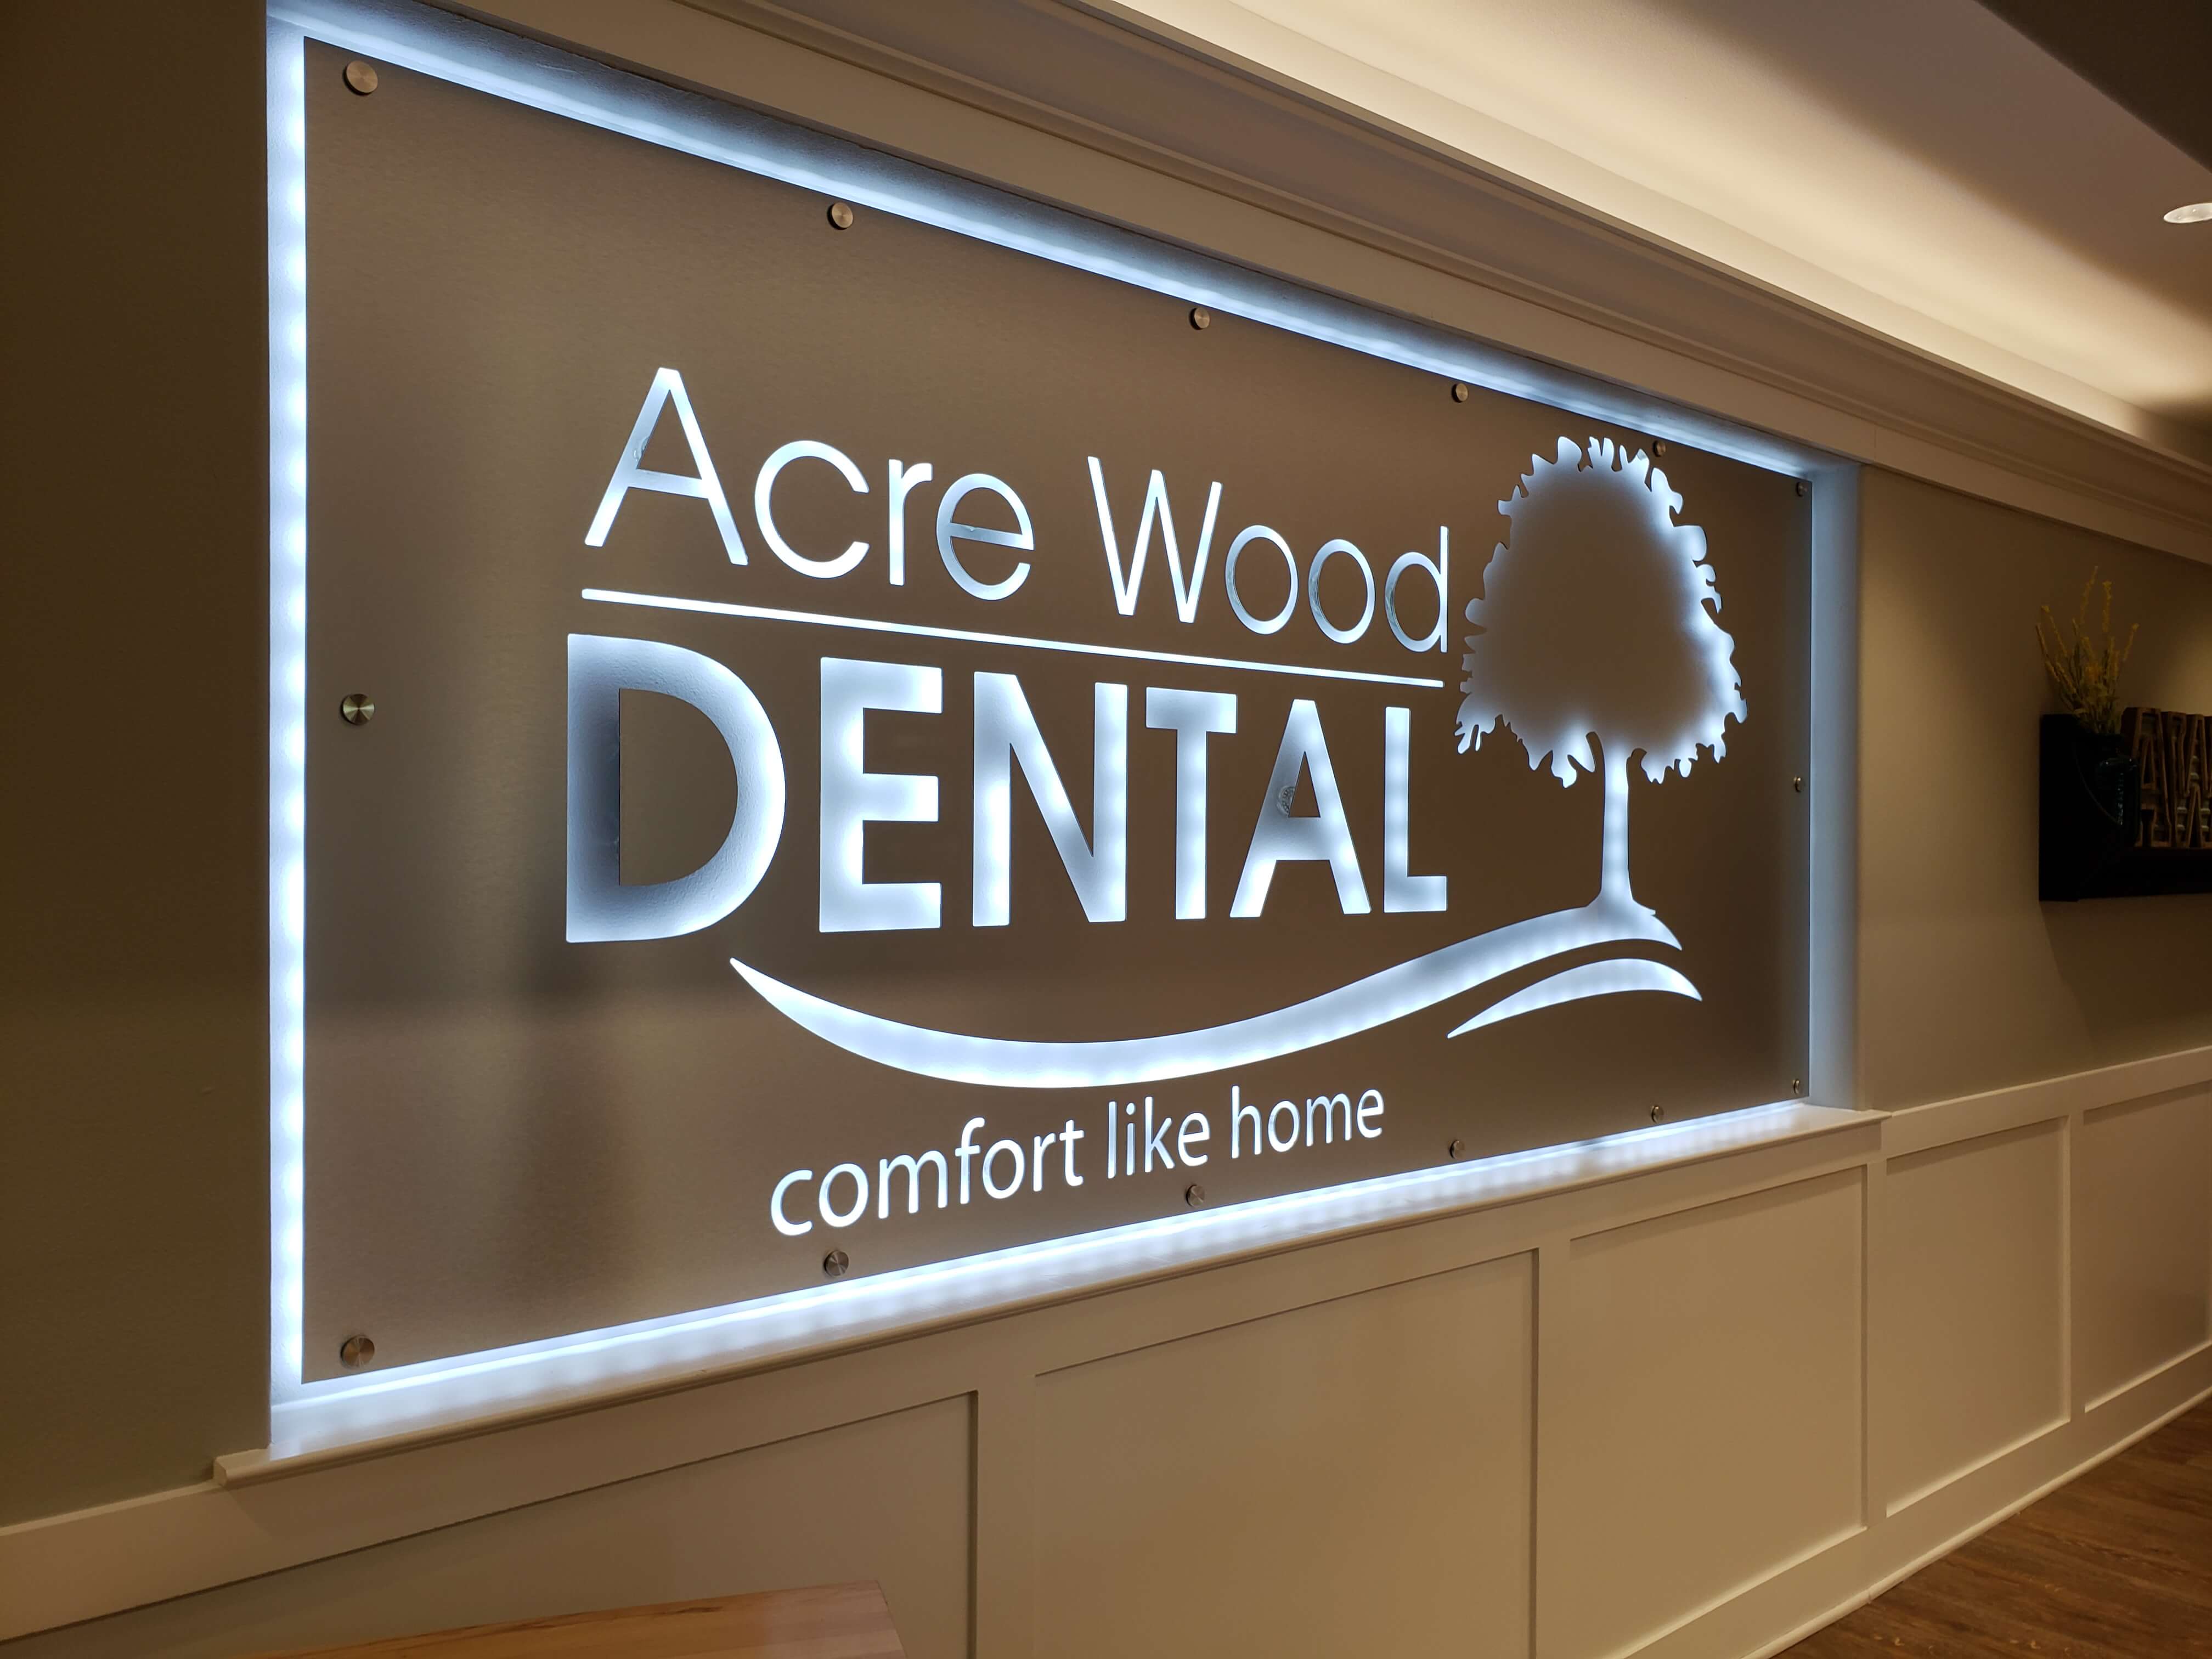 Acre Wood Dental-main sign, lit

"comfort like home"